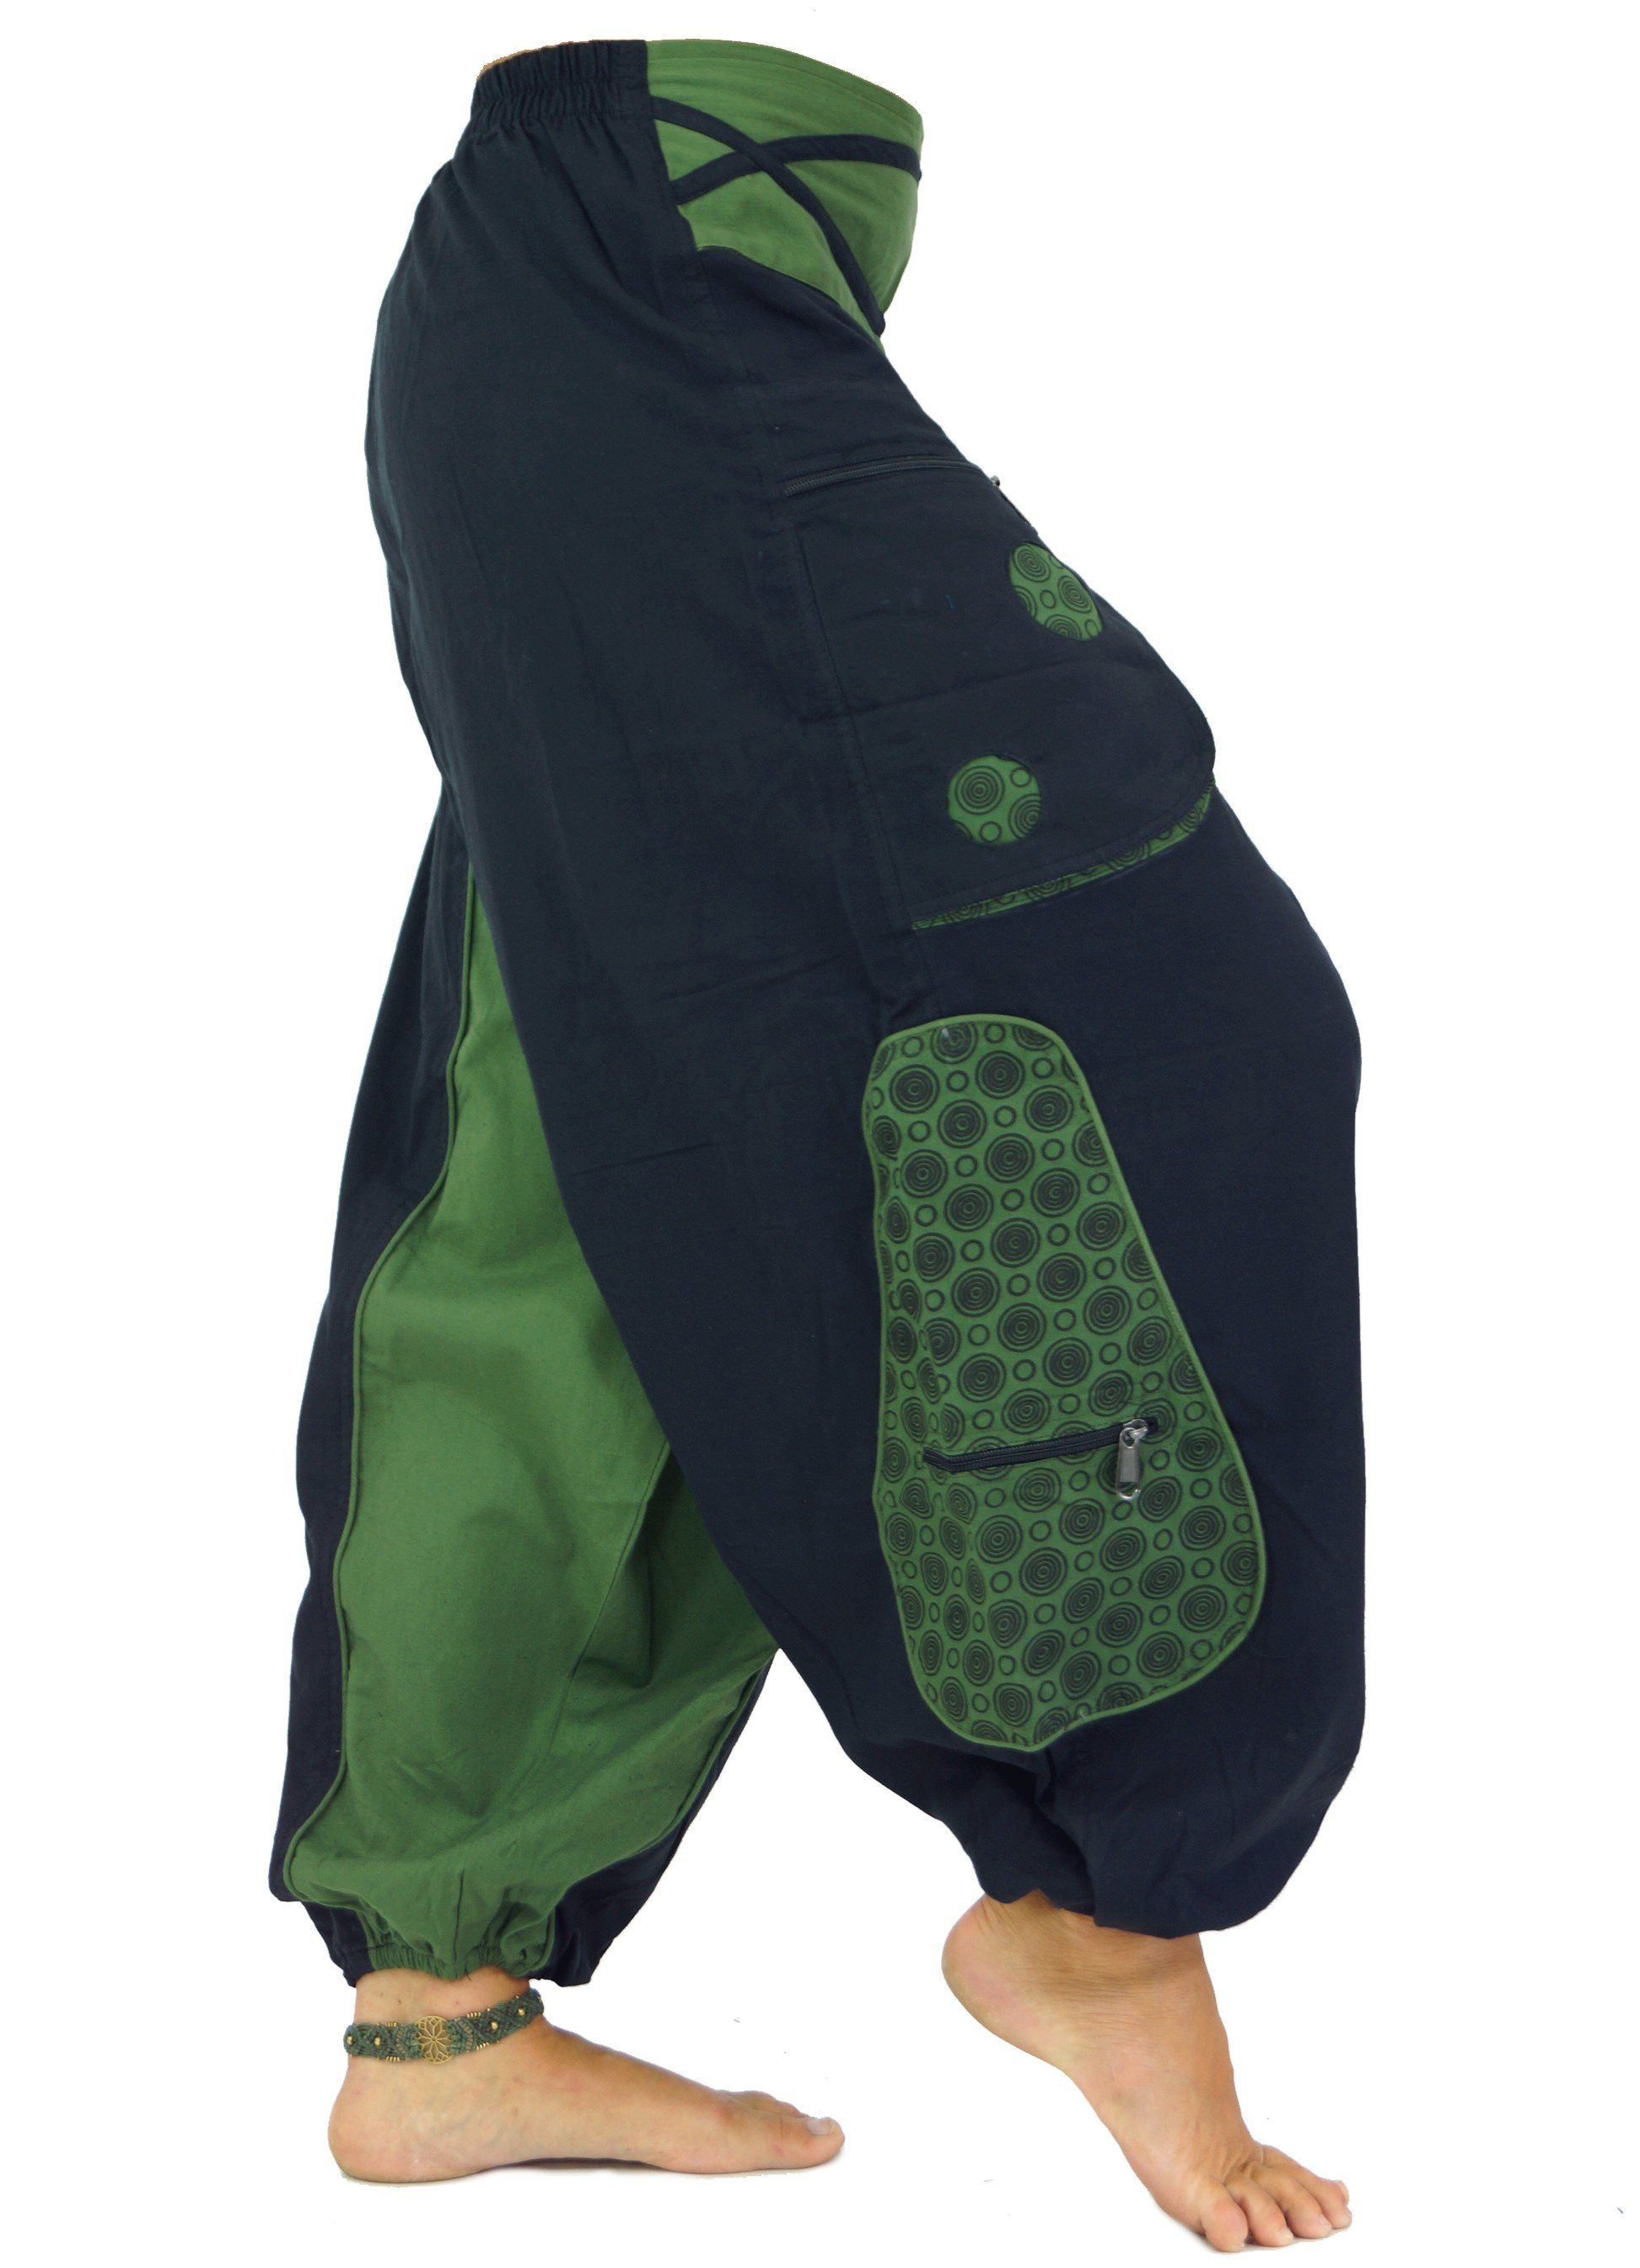 schwarz/grün Relaxhose Pluderhose Style, alternative Guru-Shop Haremshose Bekleidung Aladinhose.. Pumphose Ethno